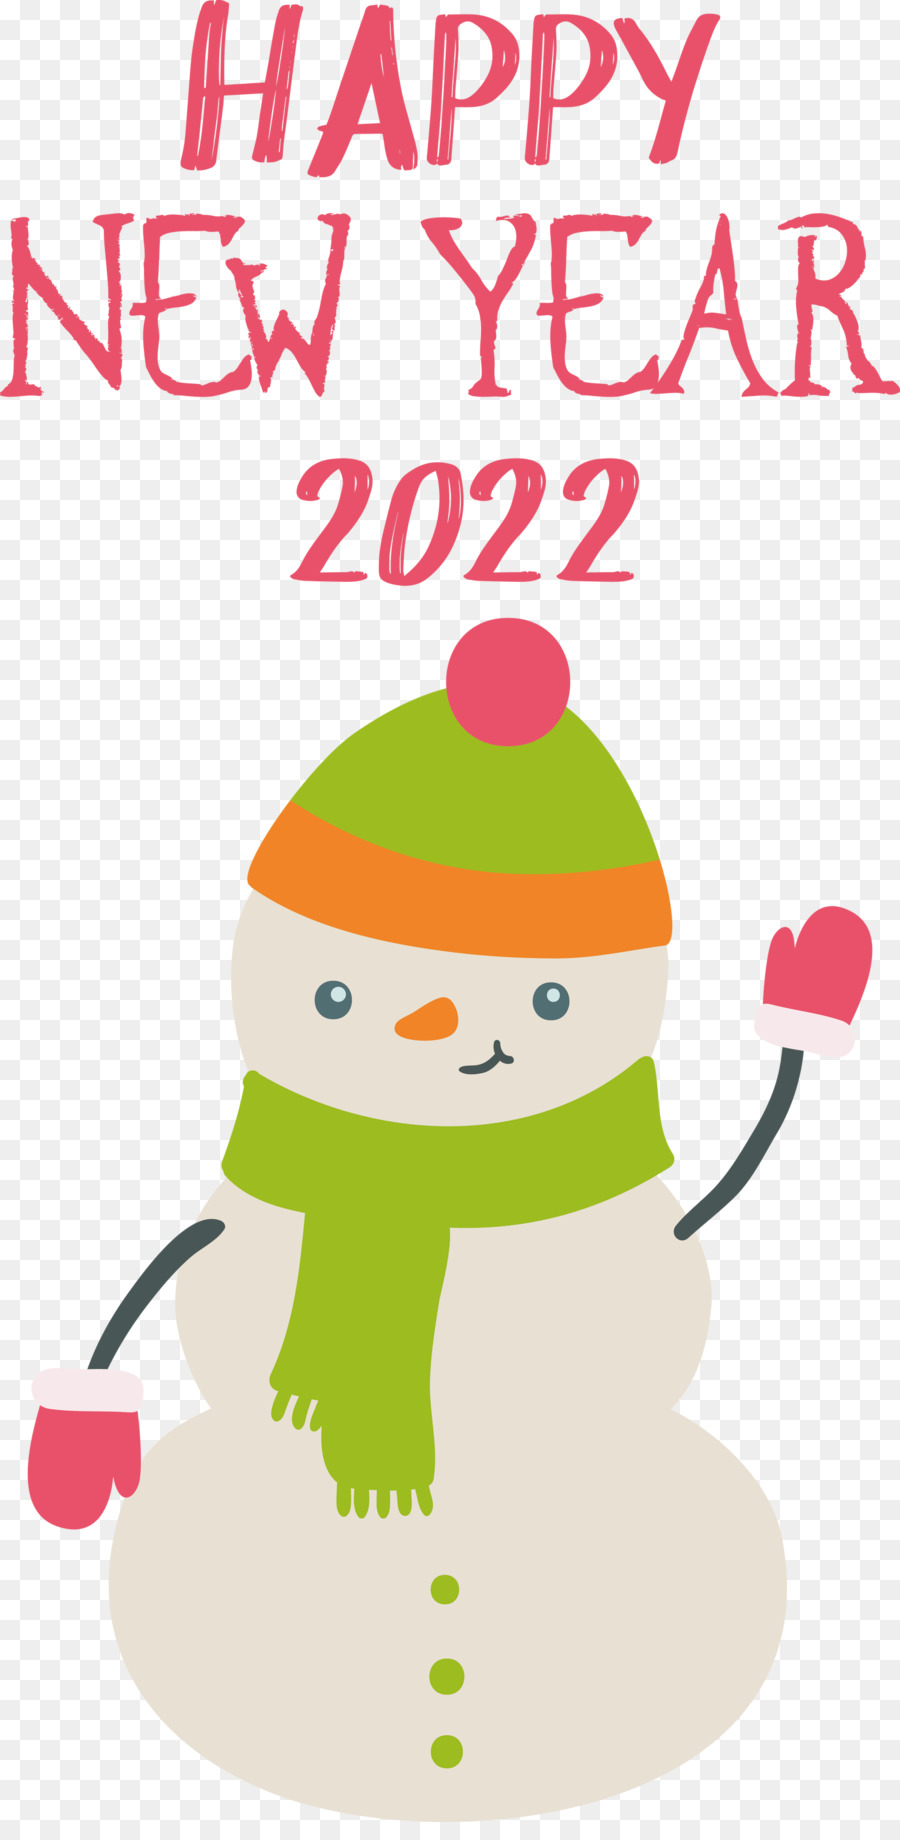 2022 New Year Happy New Year 2022